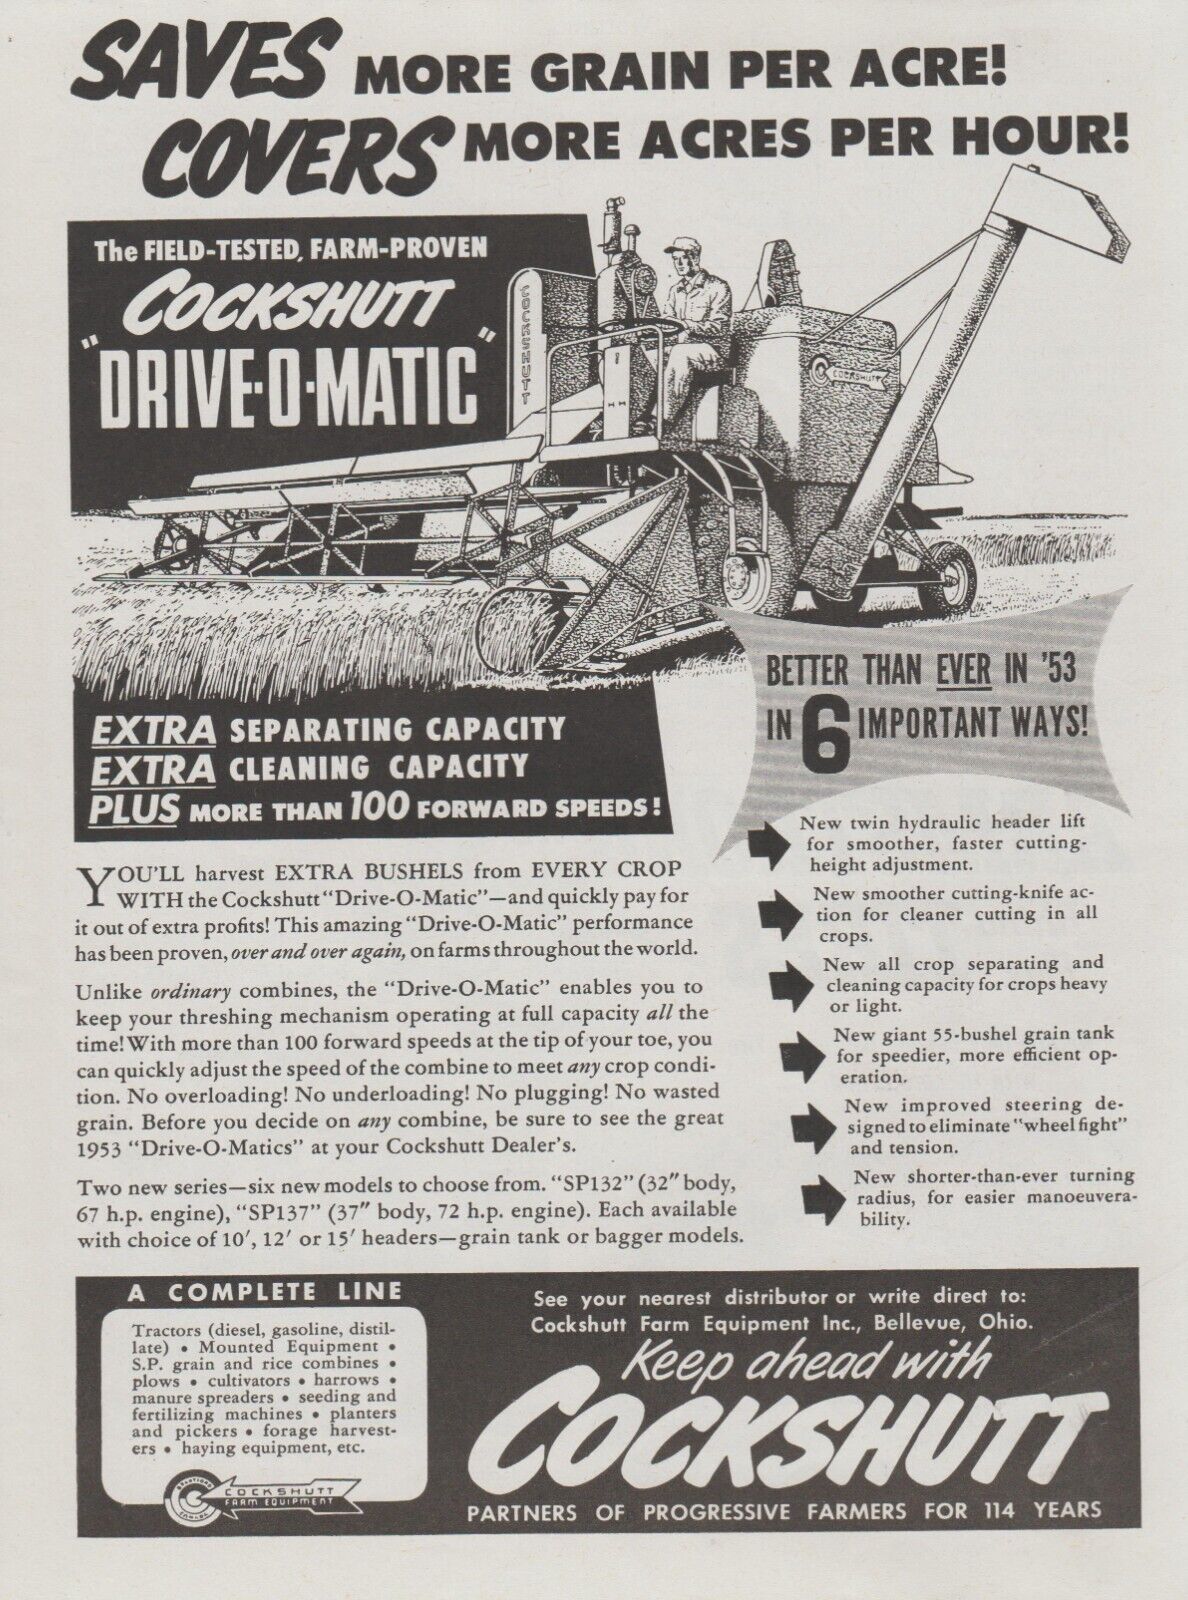 1953 Cockshutt Drive-O-Matic Harvester - Grain Farmer Works Crop - Print Ad Art